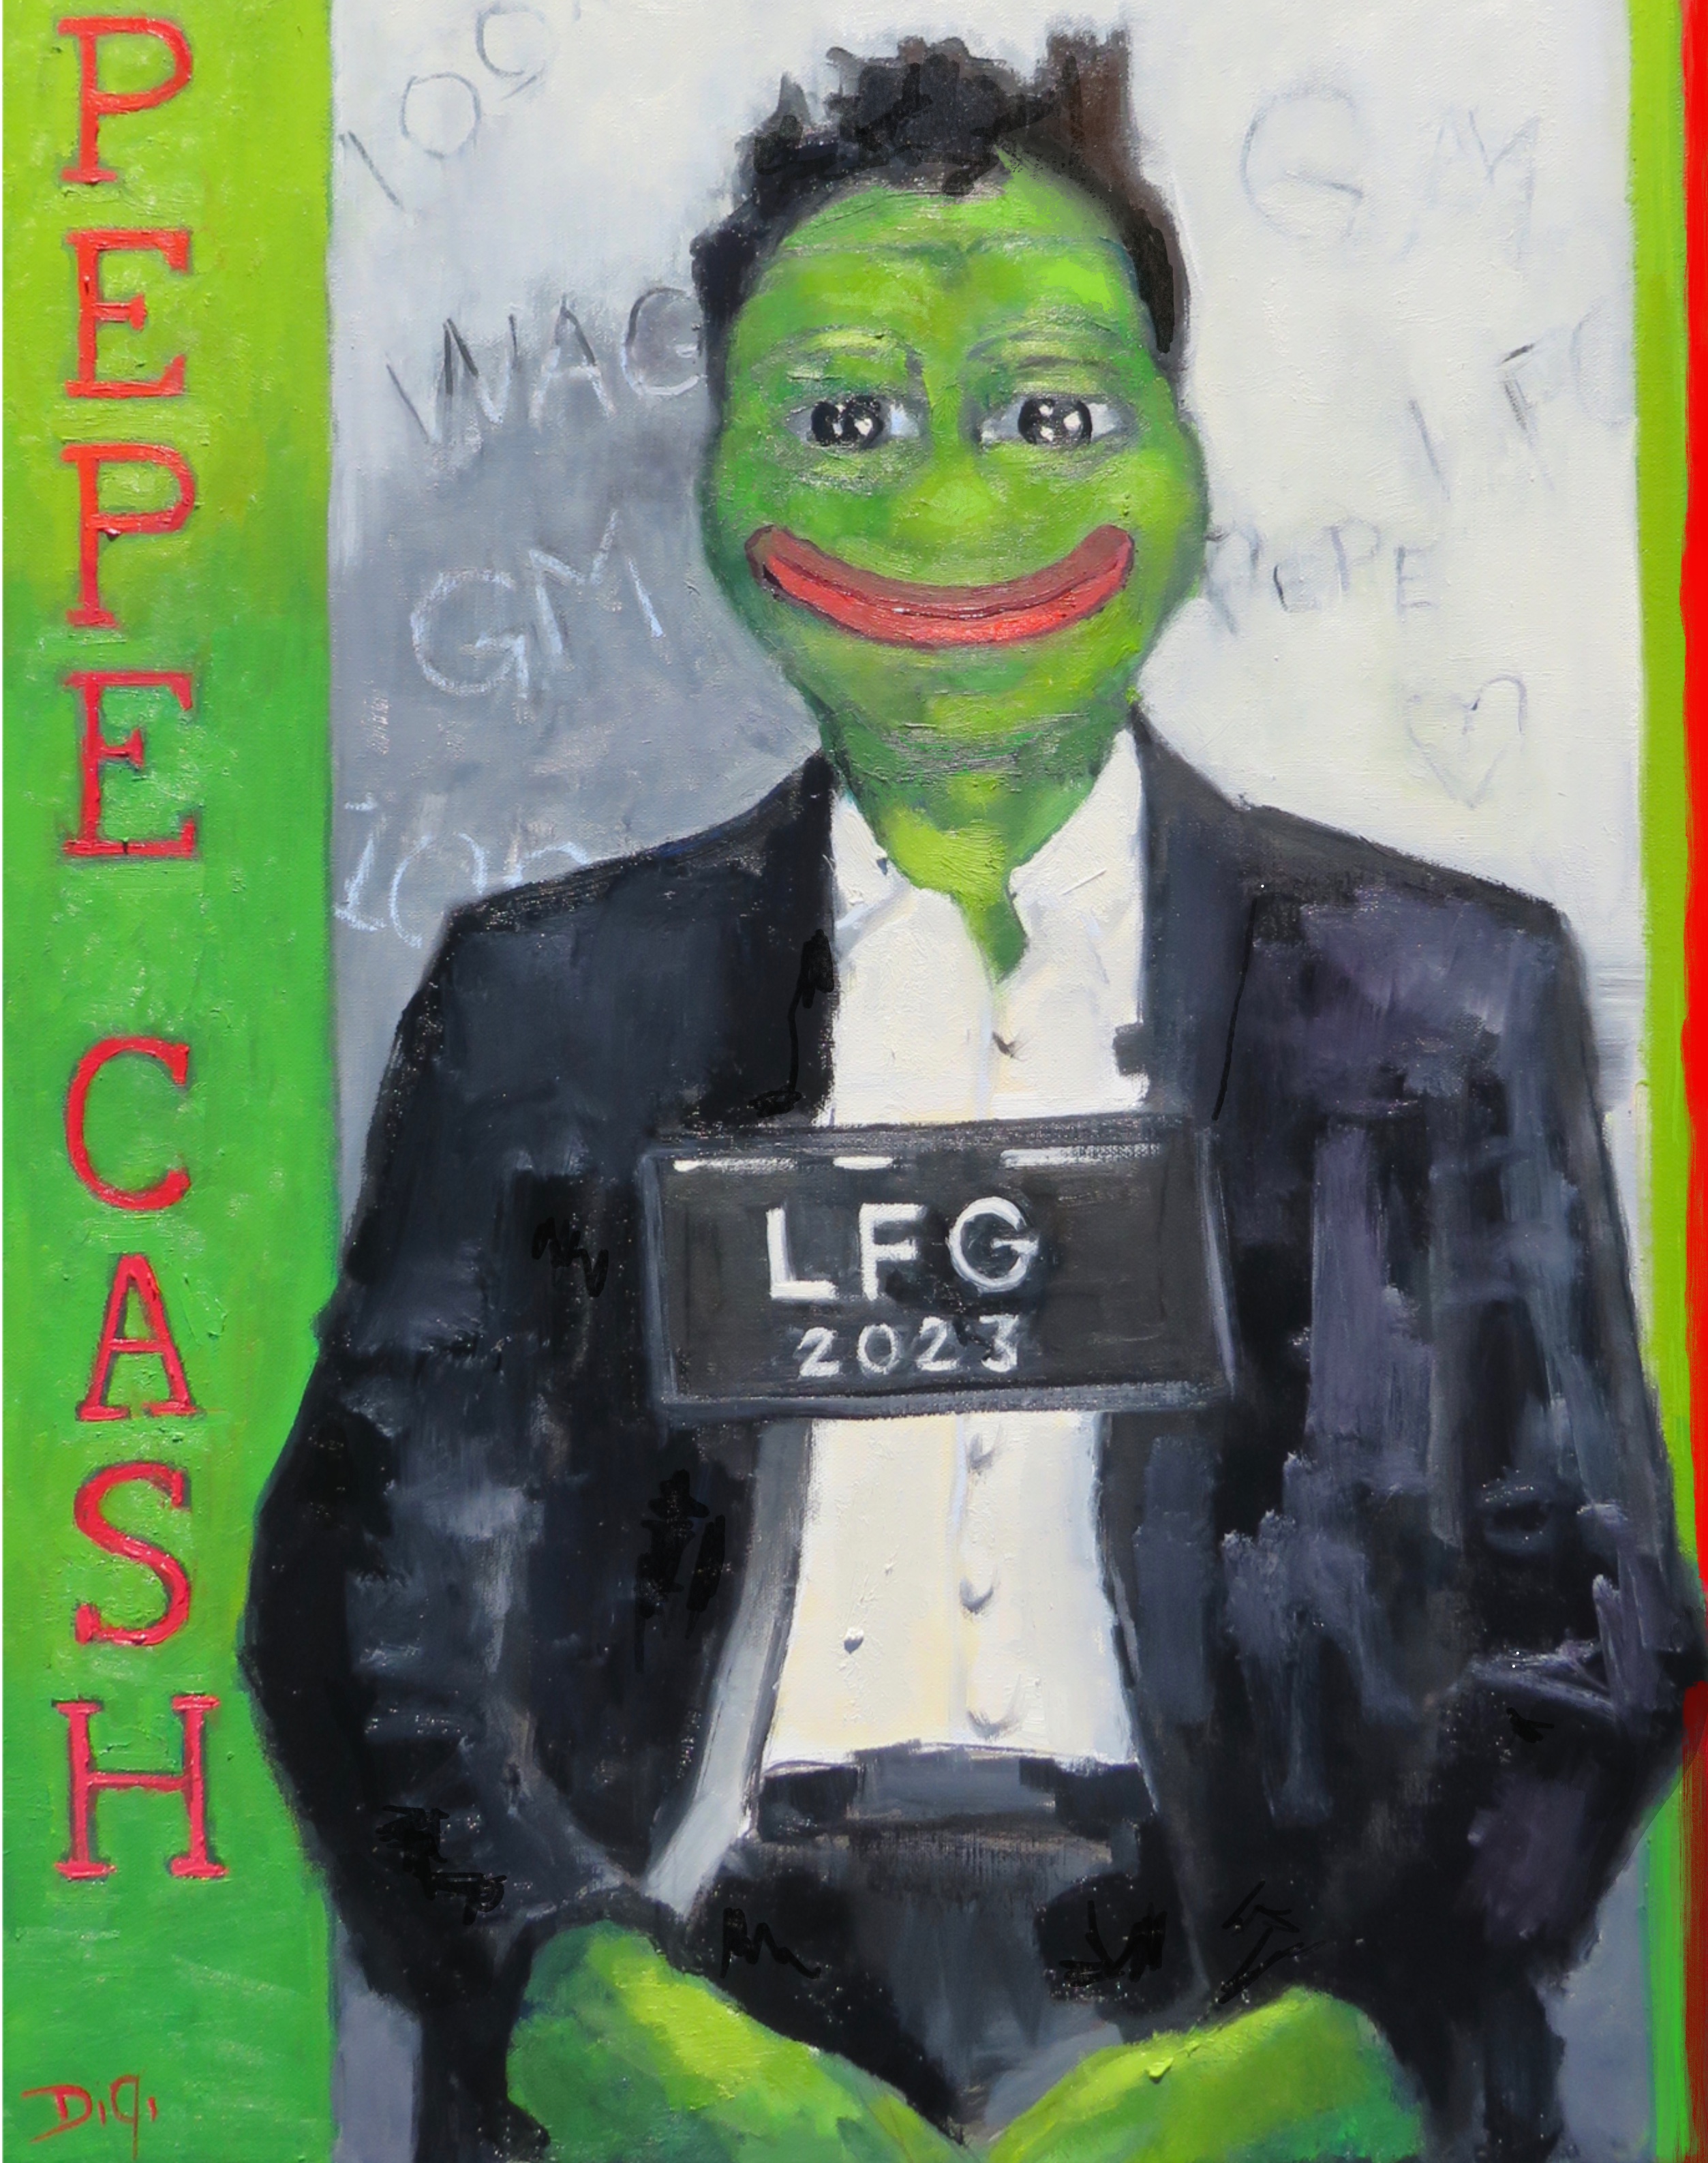 Pepe Cash